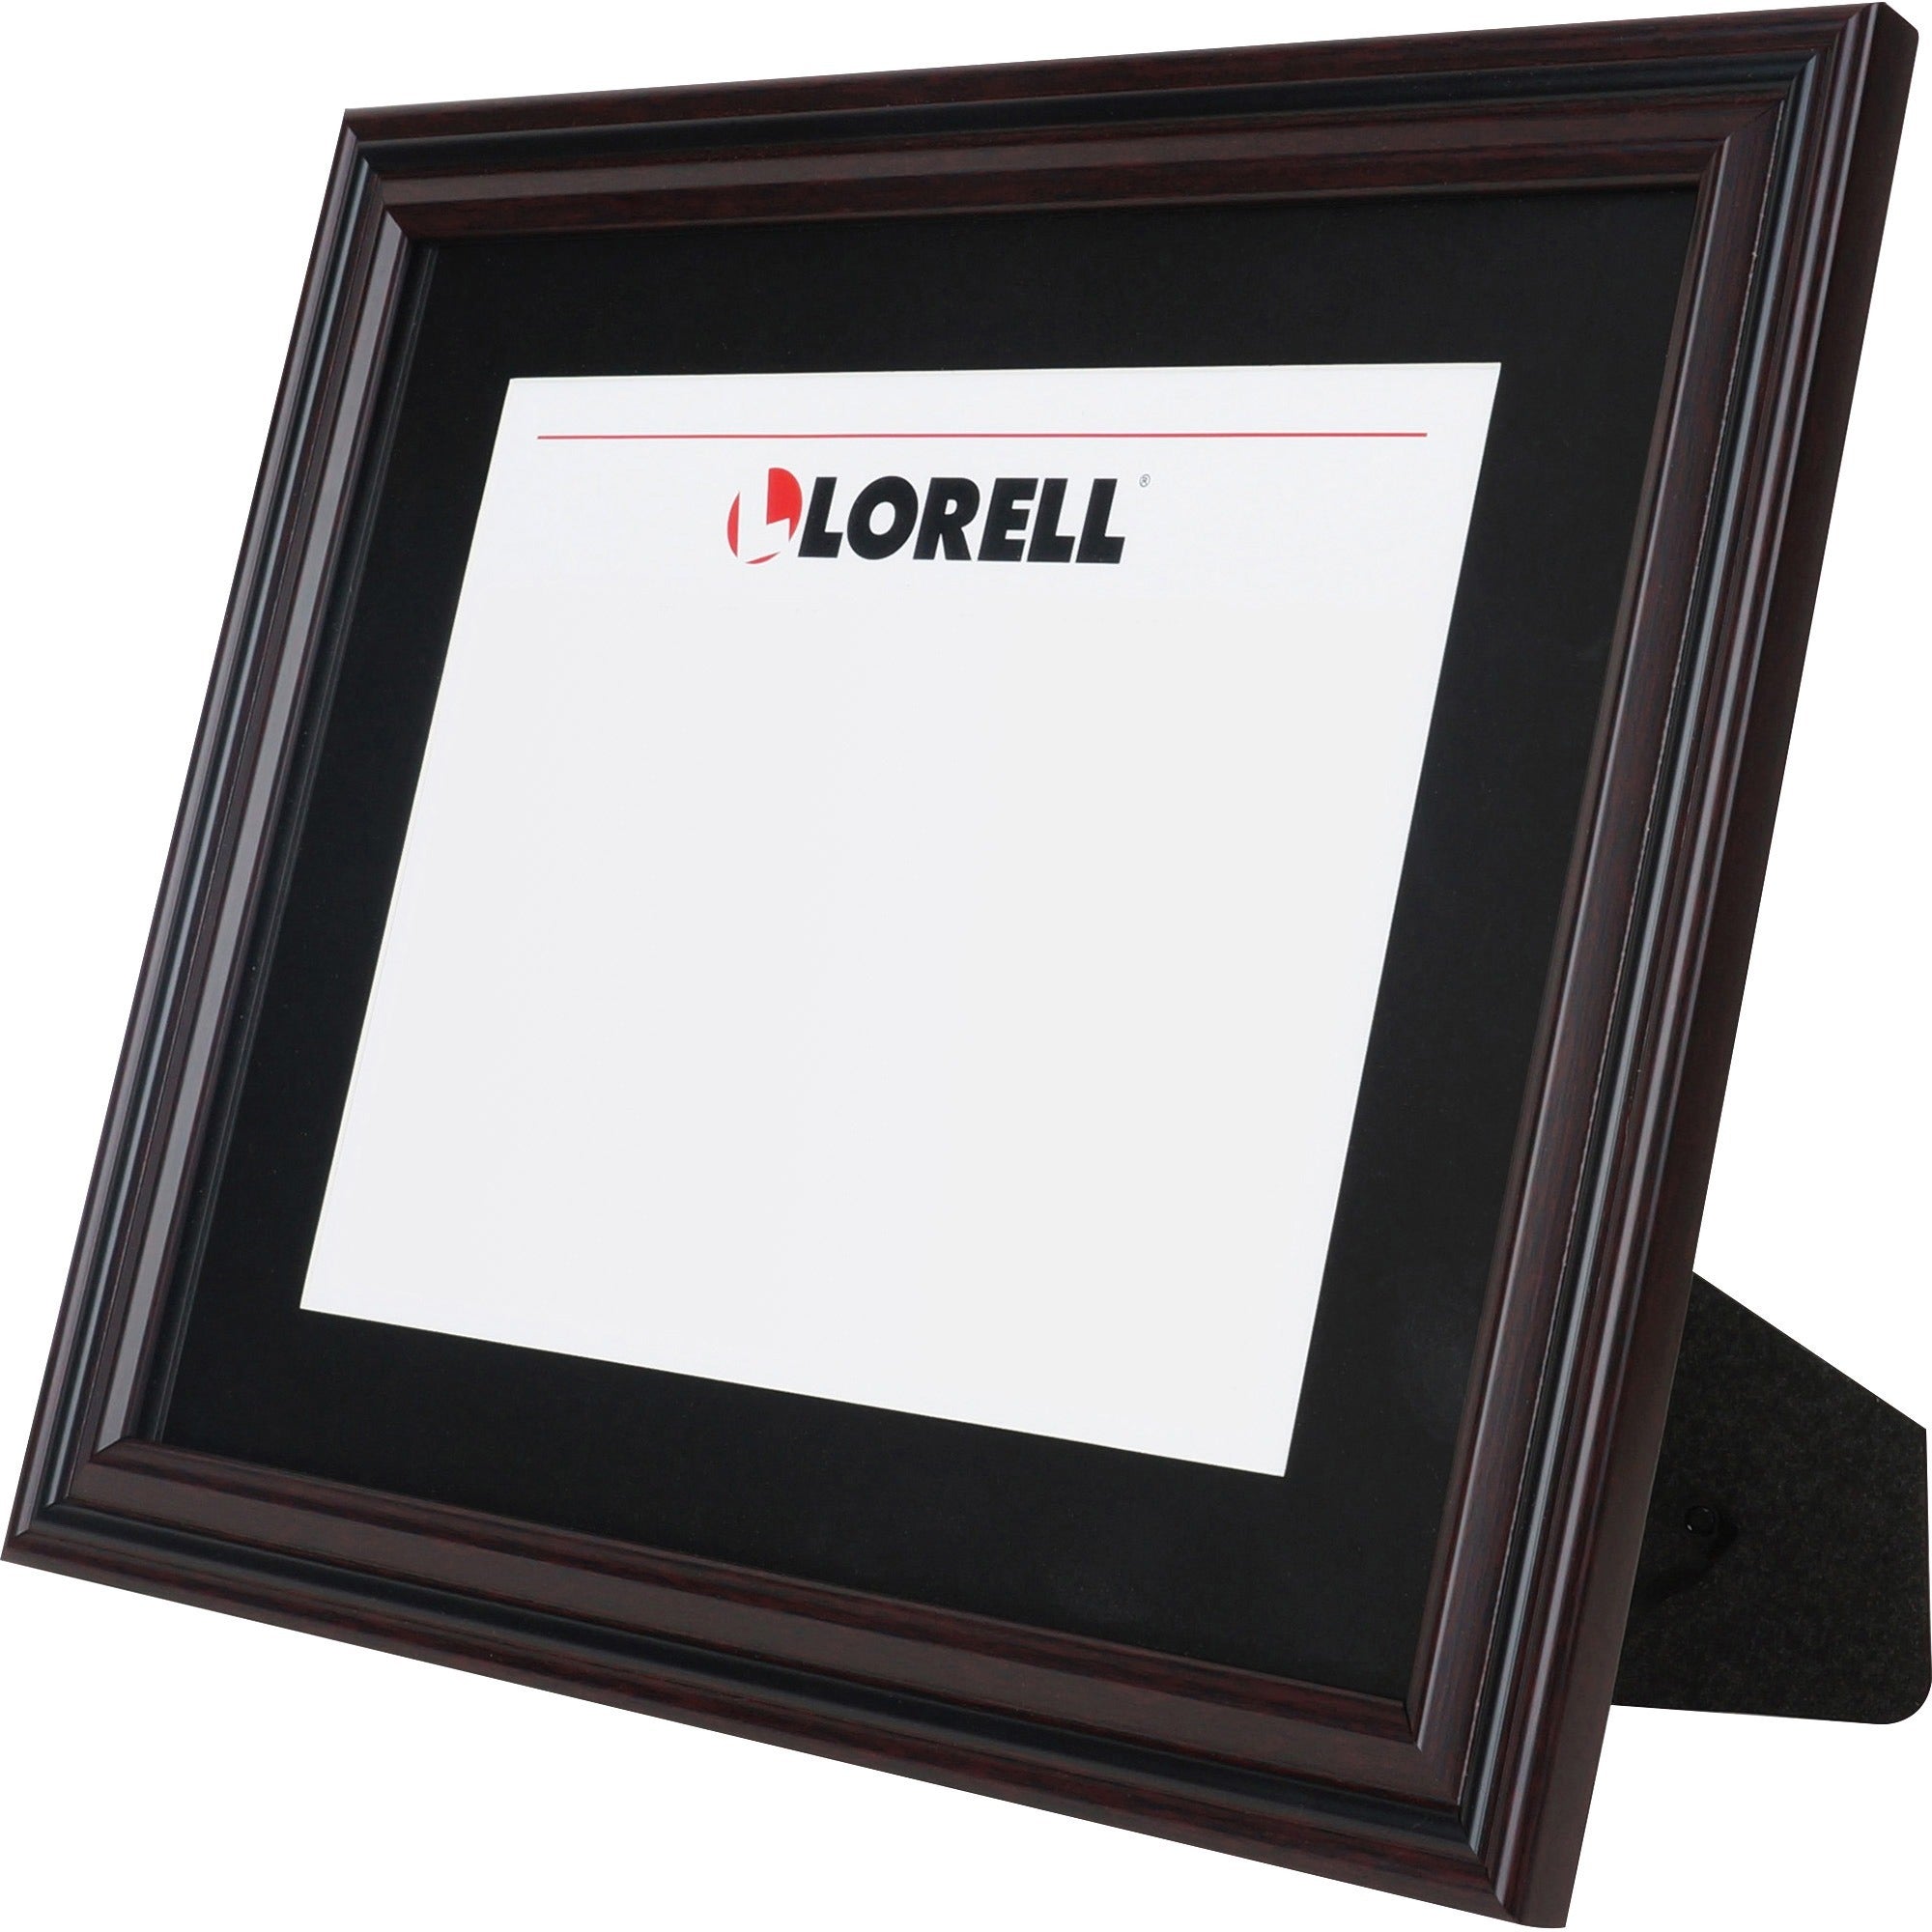 lorell-2-toned-certificate-frame-13-x-1050-frame-size-rectangle-desktop-horizontal-vertical-1-each-rosewood_llr49216 - 1